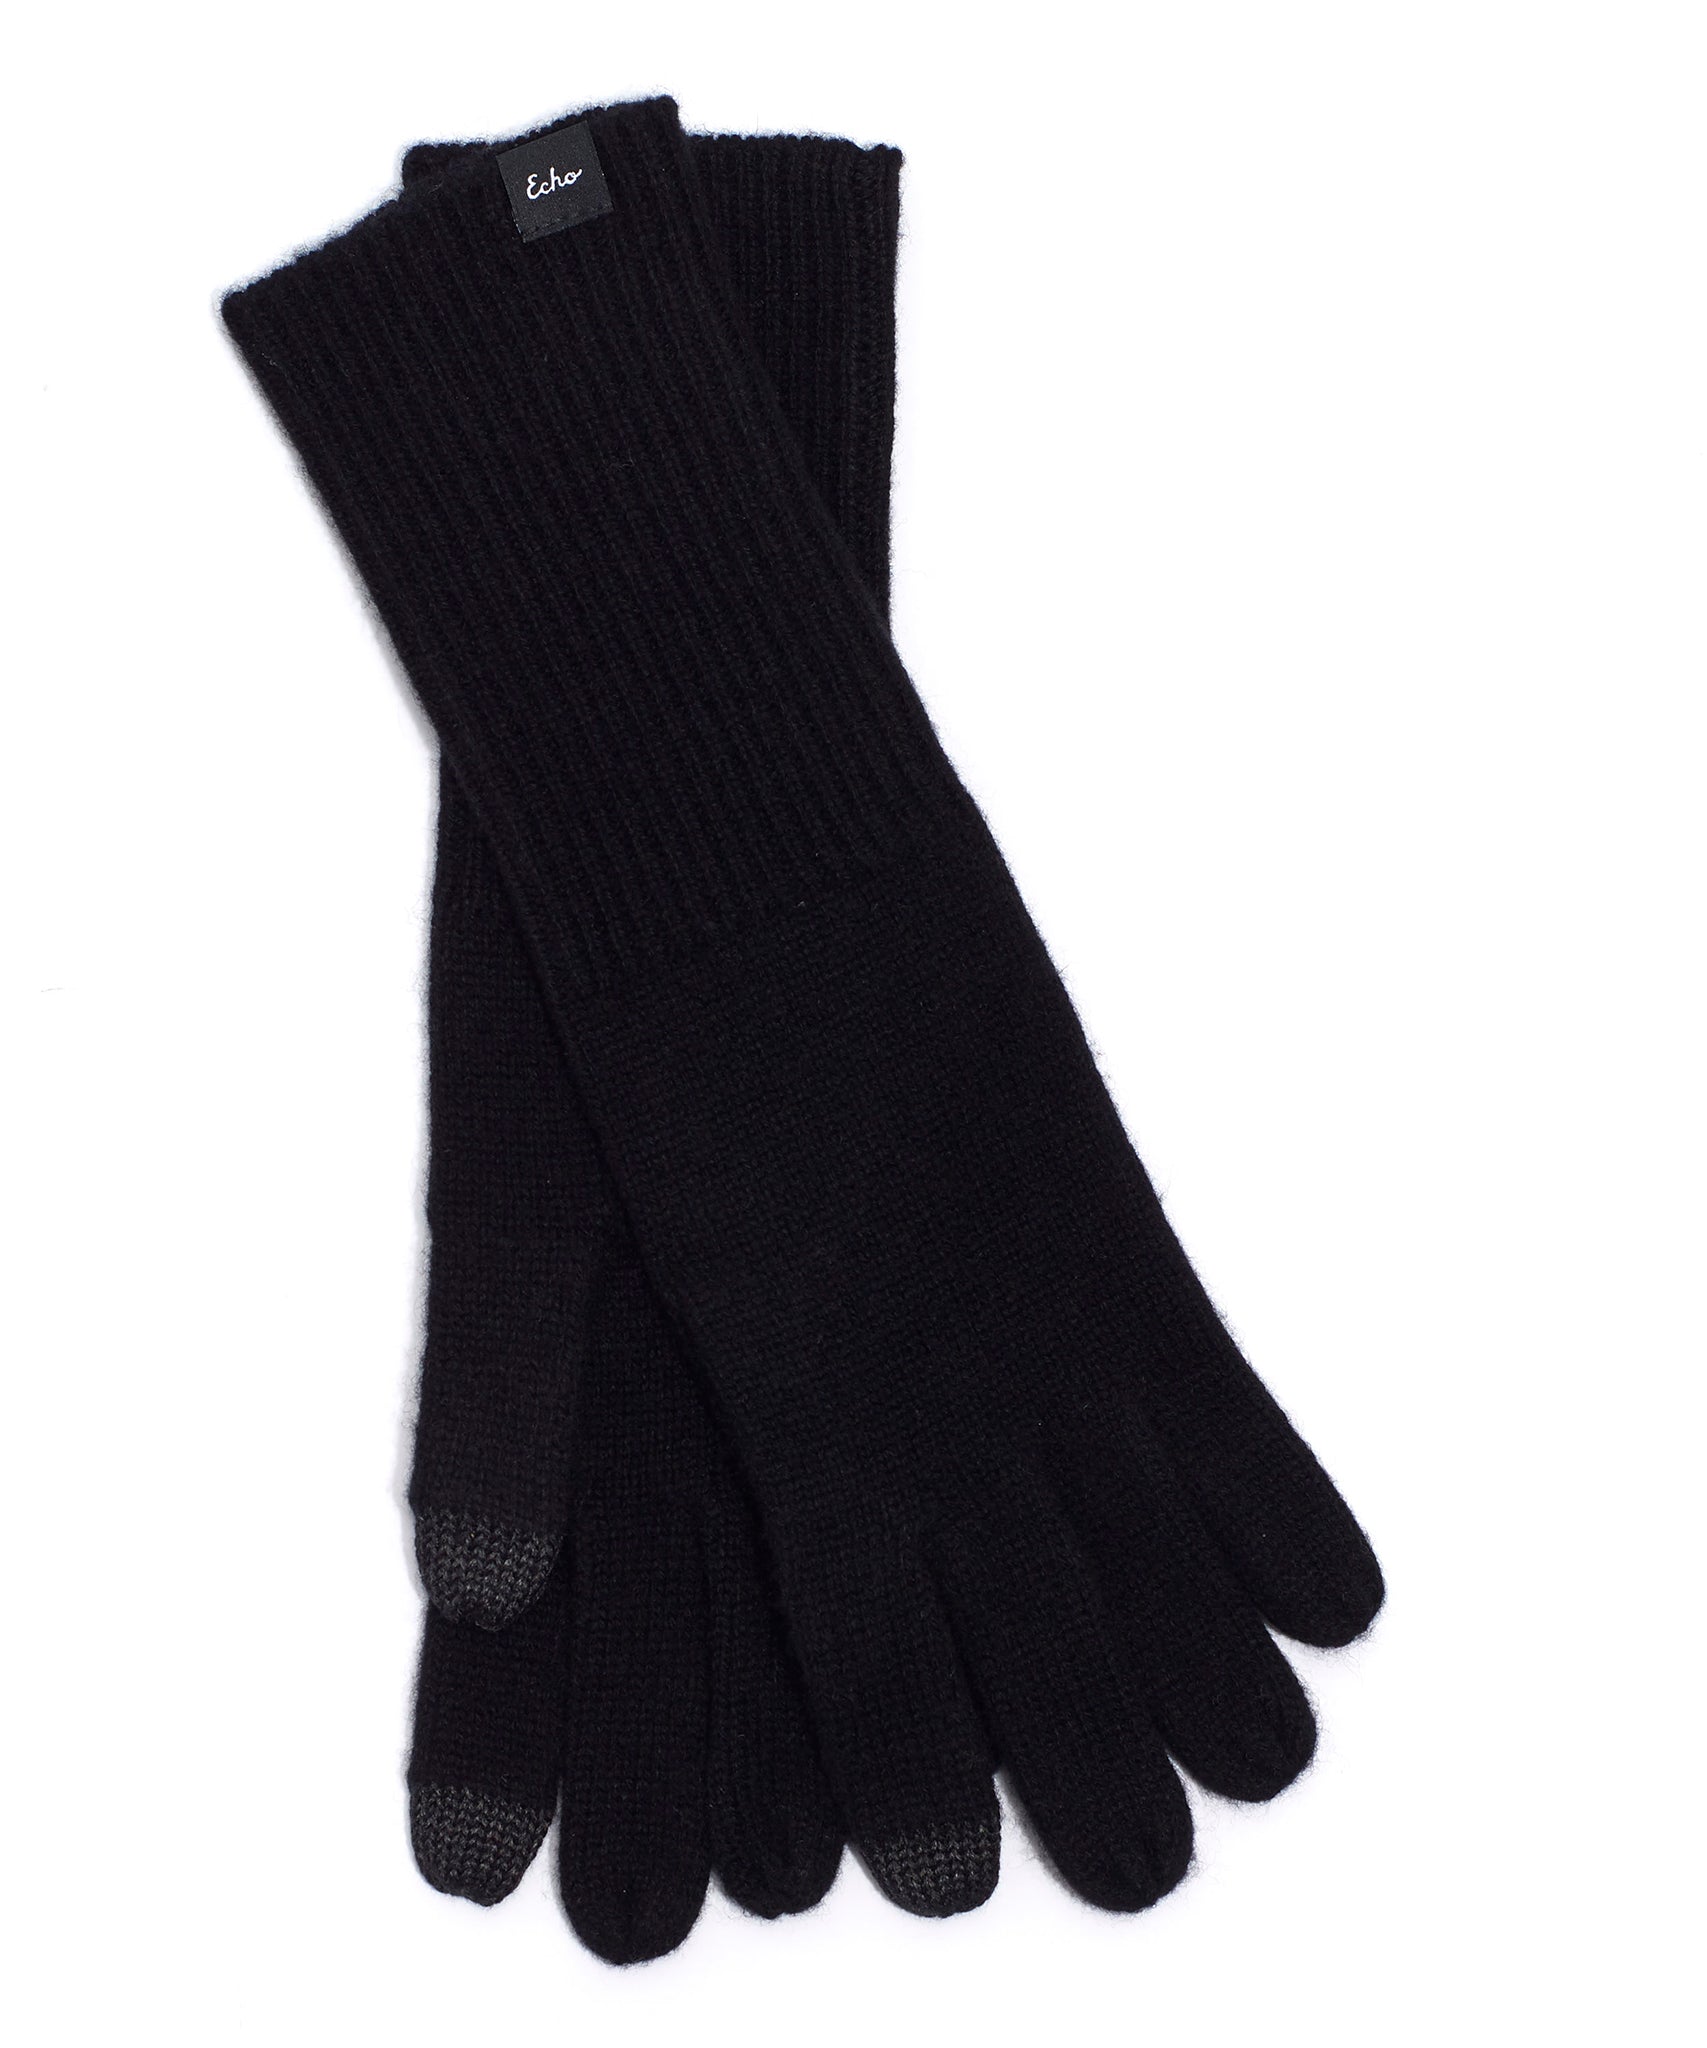 Wool/Cashmere  Gloves in color Black